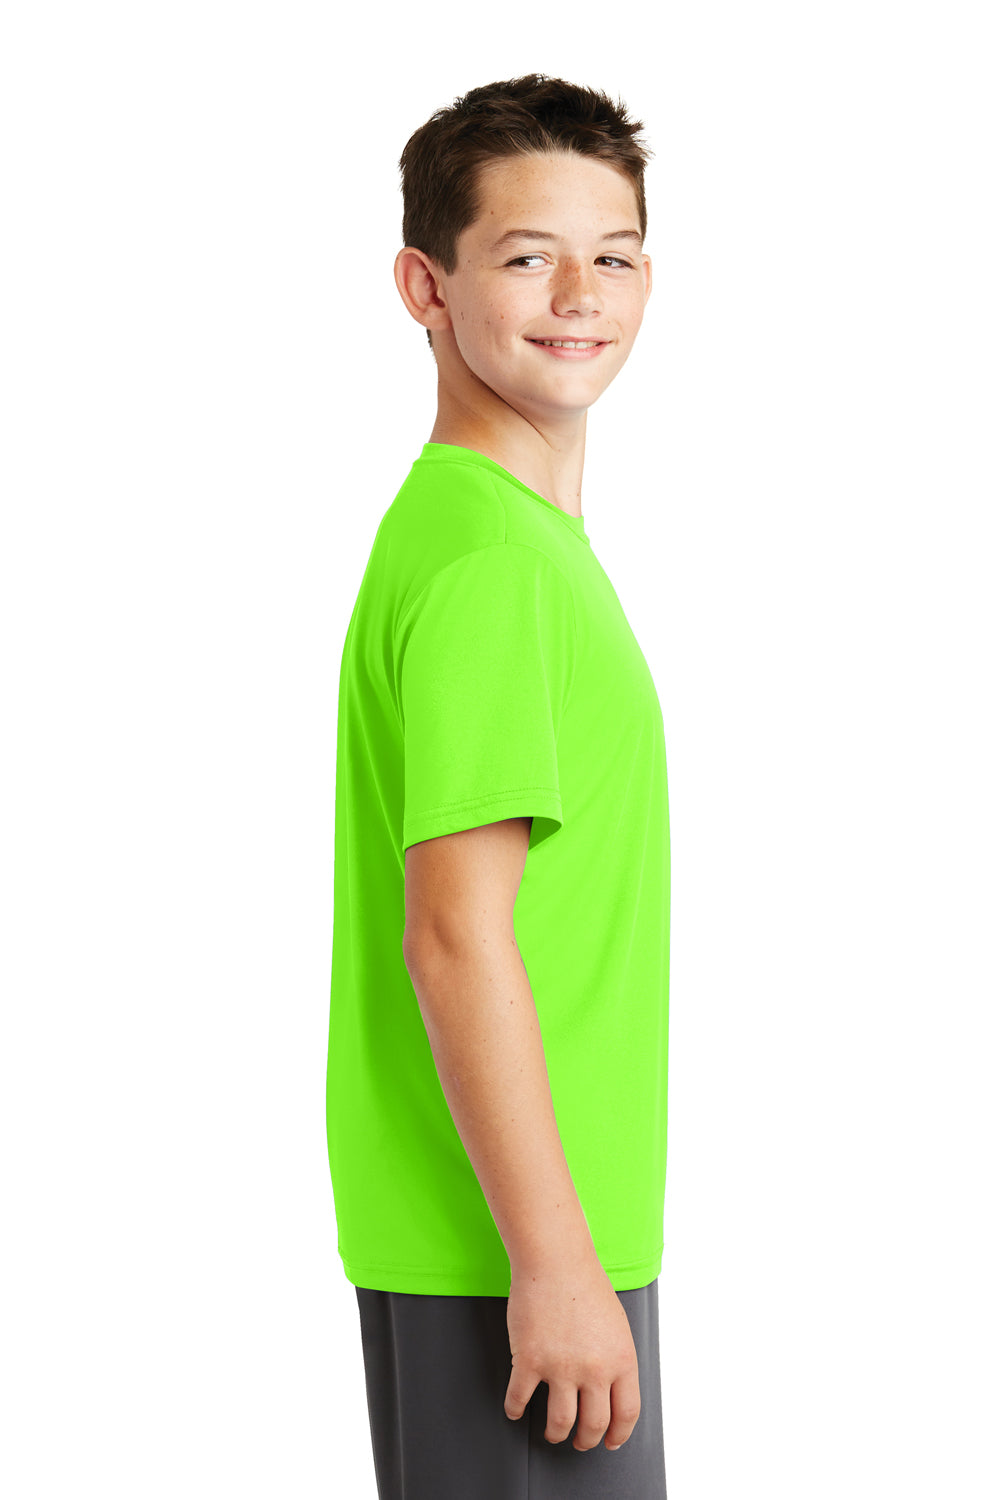 Sport-Tek YST320 Youth Tough Moisture Wicking Short Sleeve Crewneck T-Shirt Neon Green Side